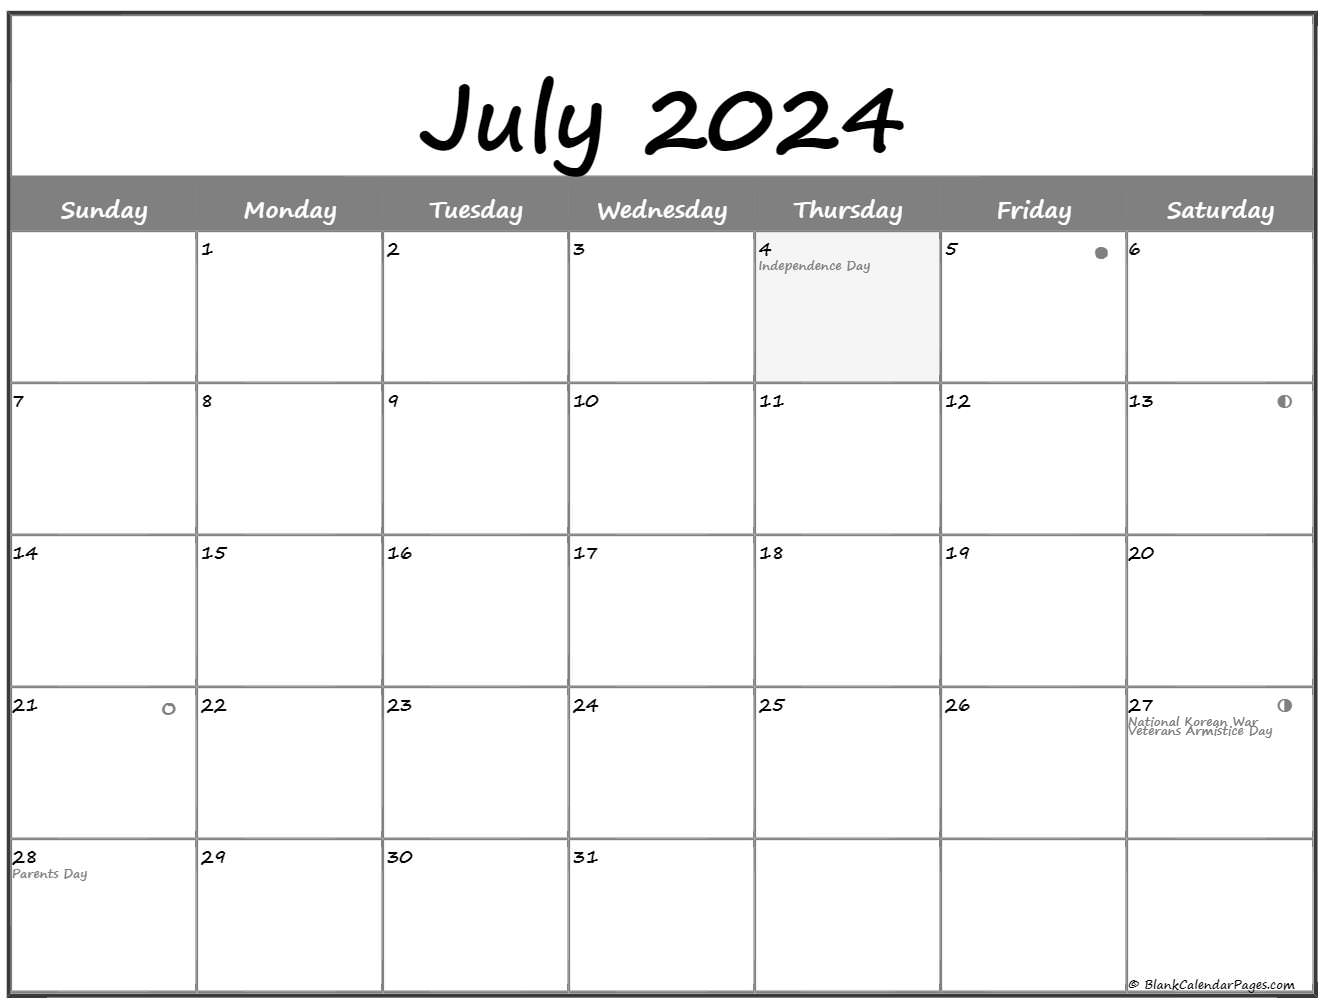 July 2023 Lunar Calendar Moon Phase Calendar